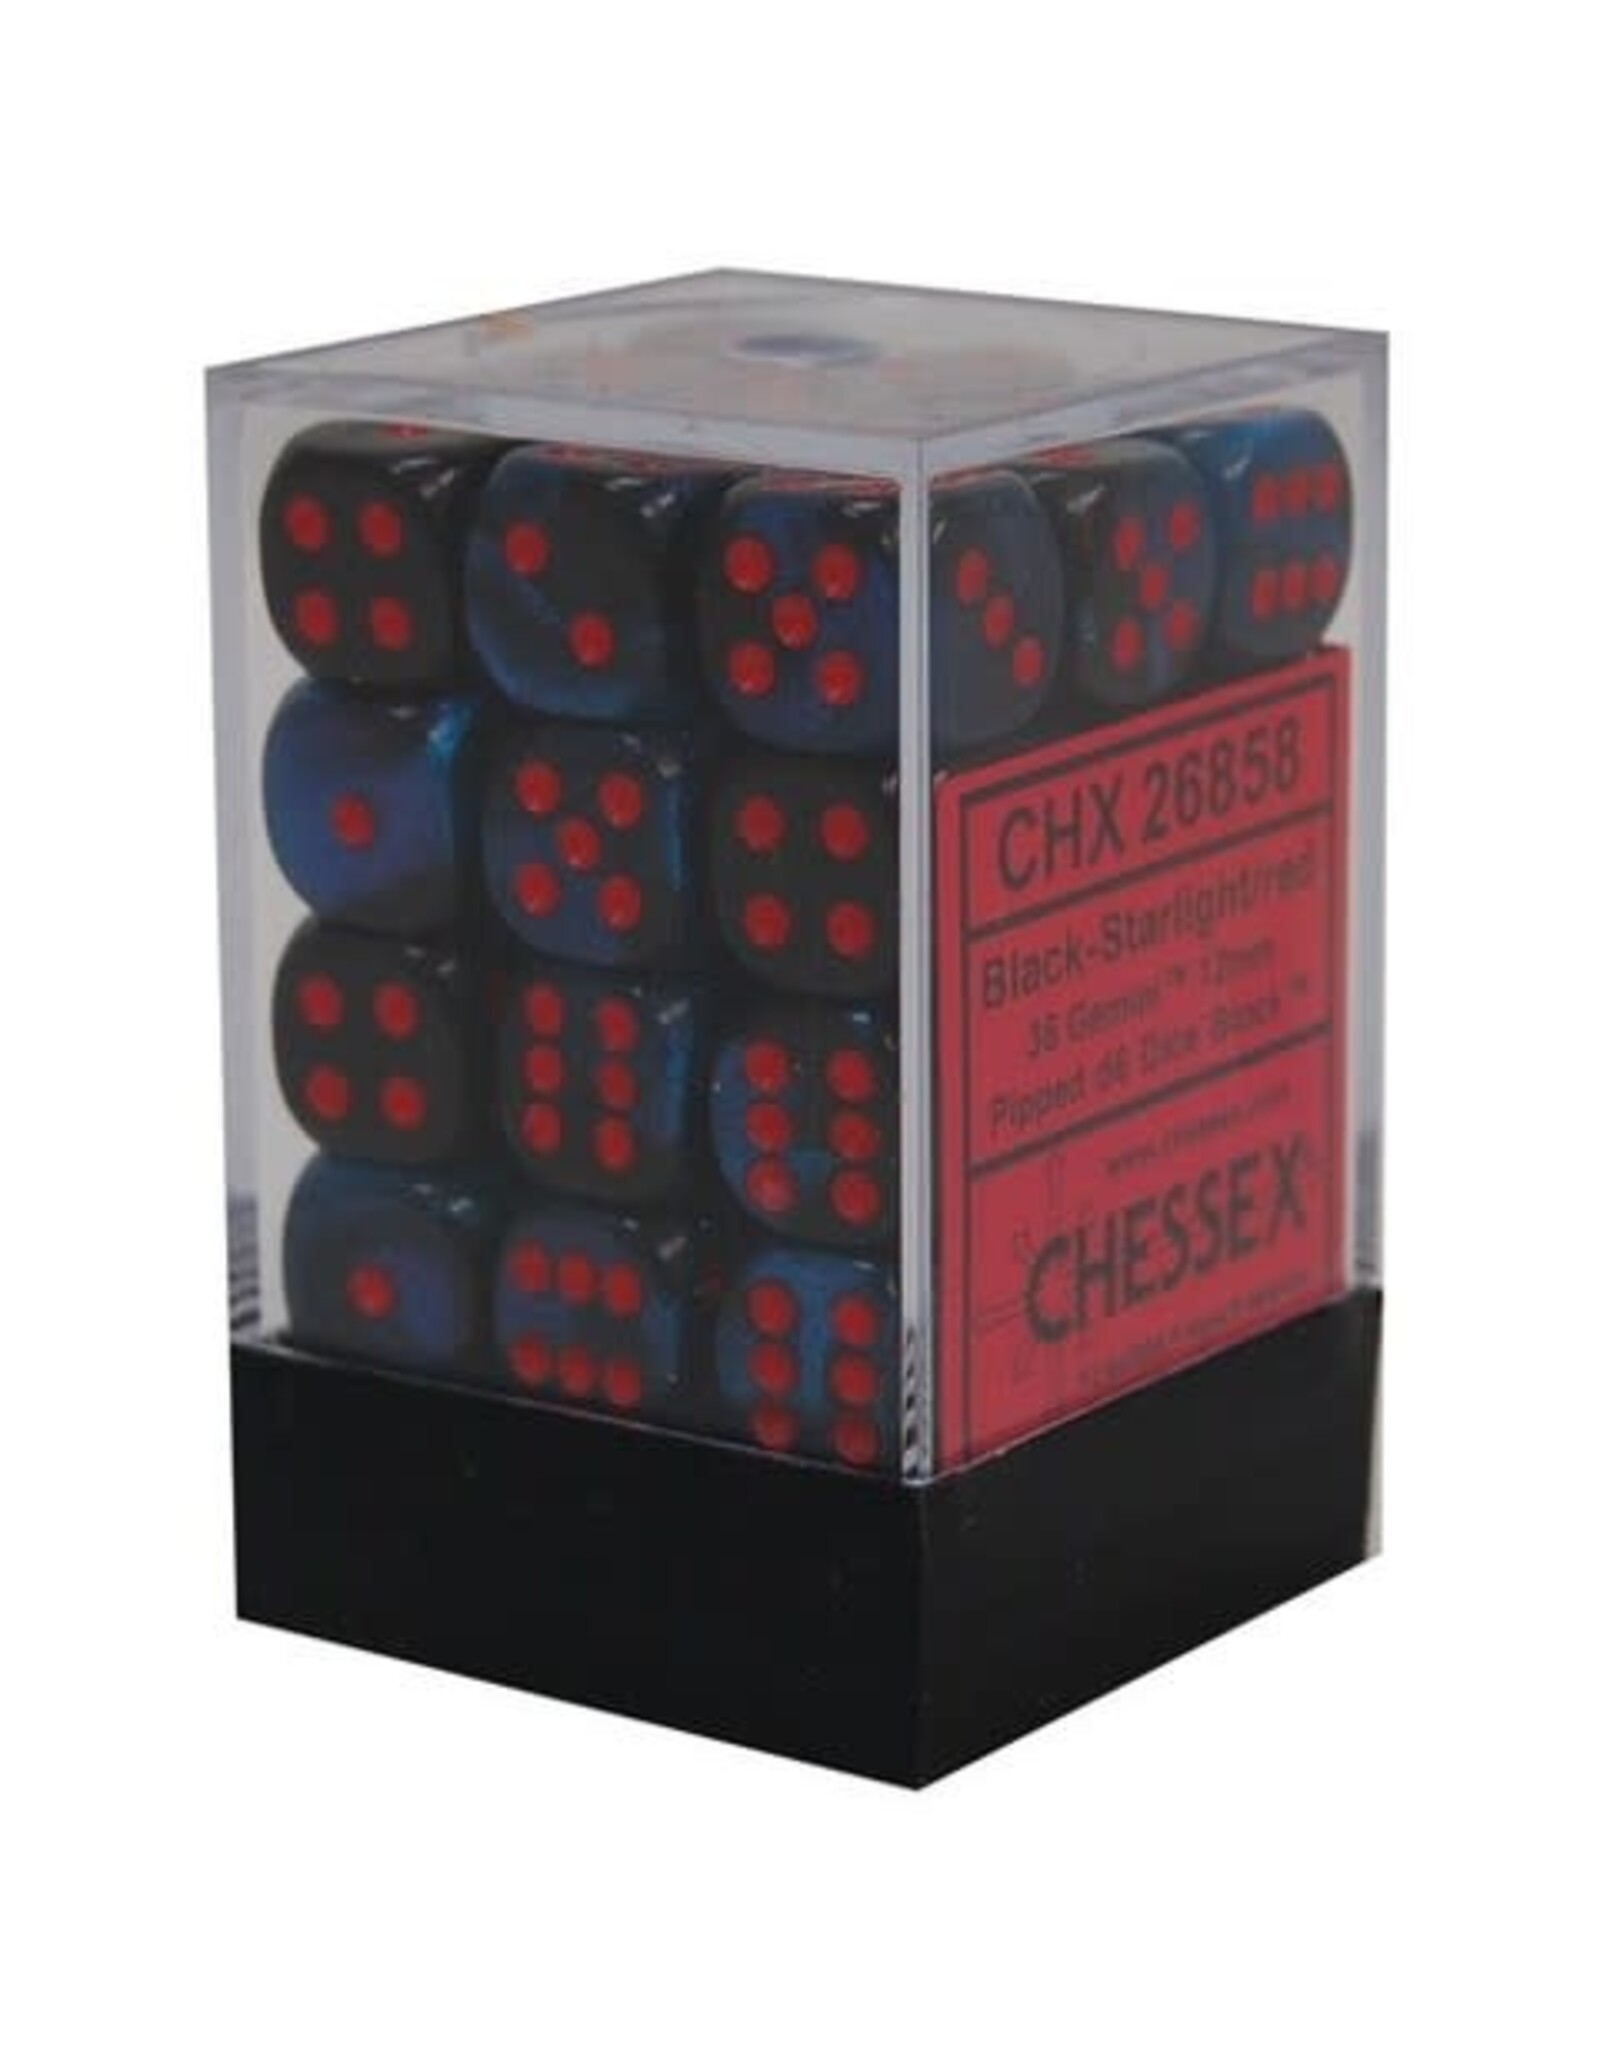 Chessex Black-Starlight/red Gemini 12mm d6 dice set